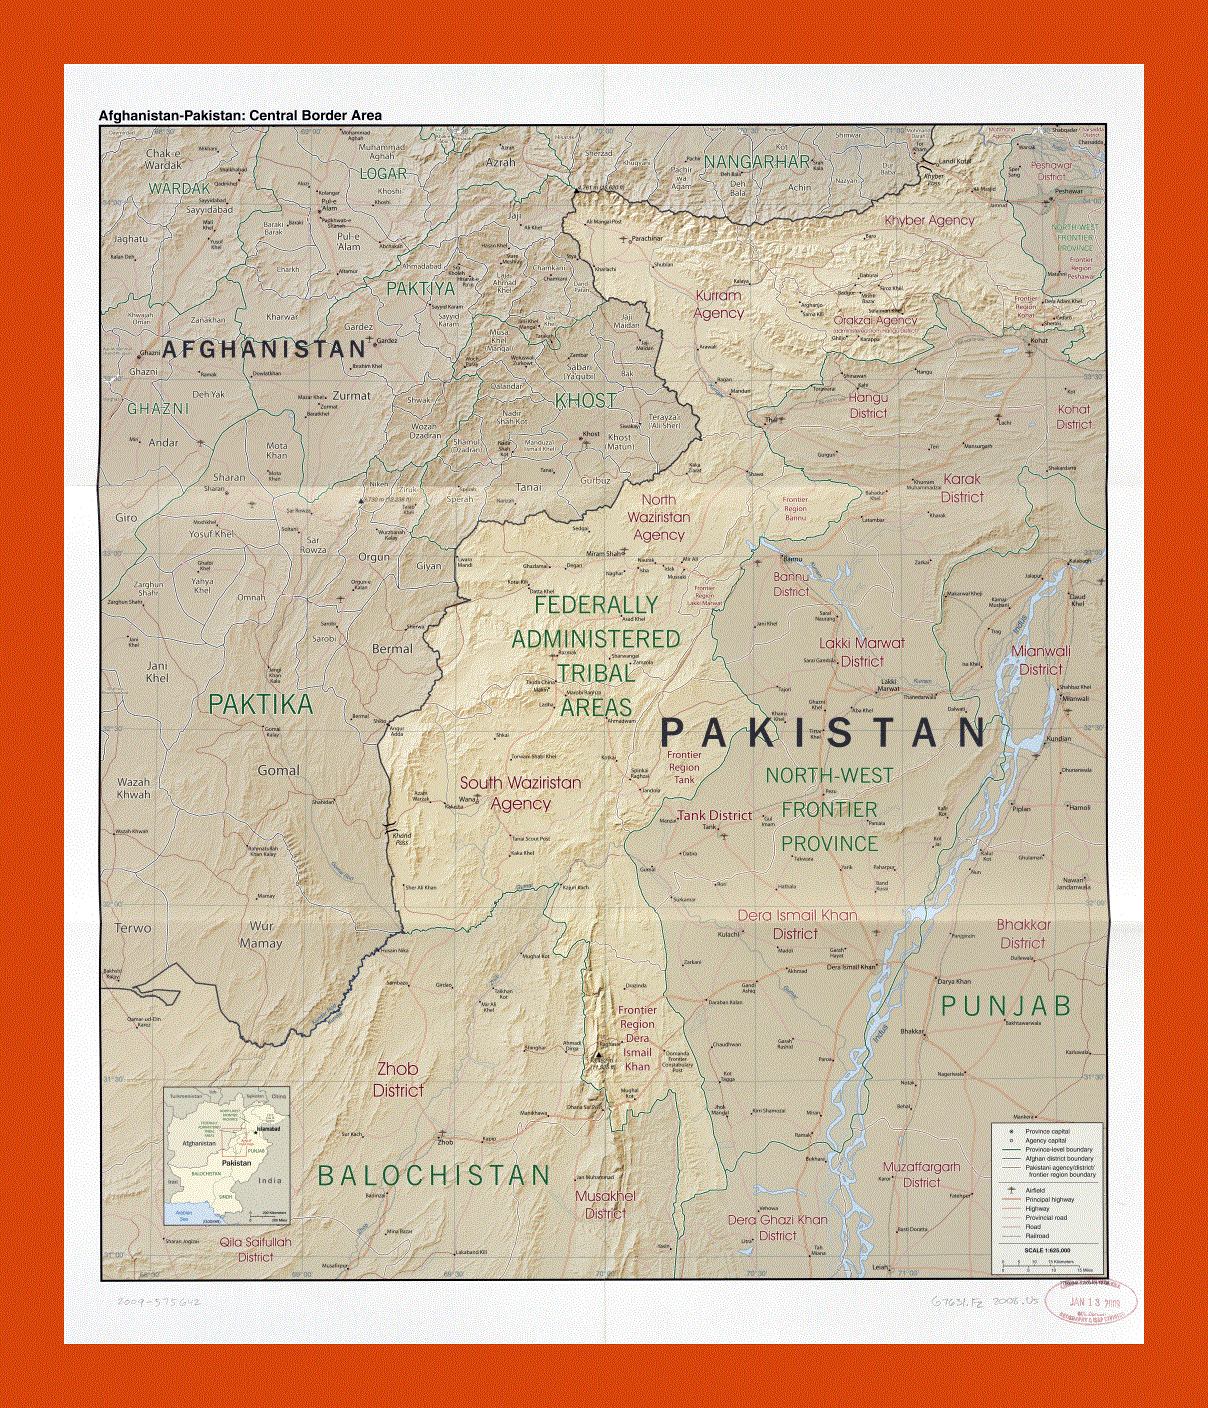 Afghanistan - Pakistan central border area map - 2008